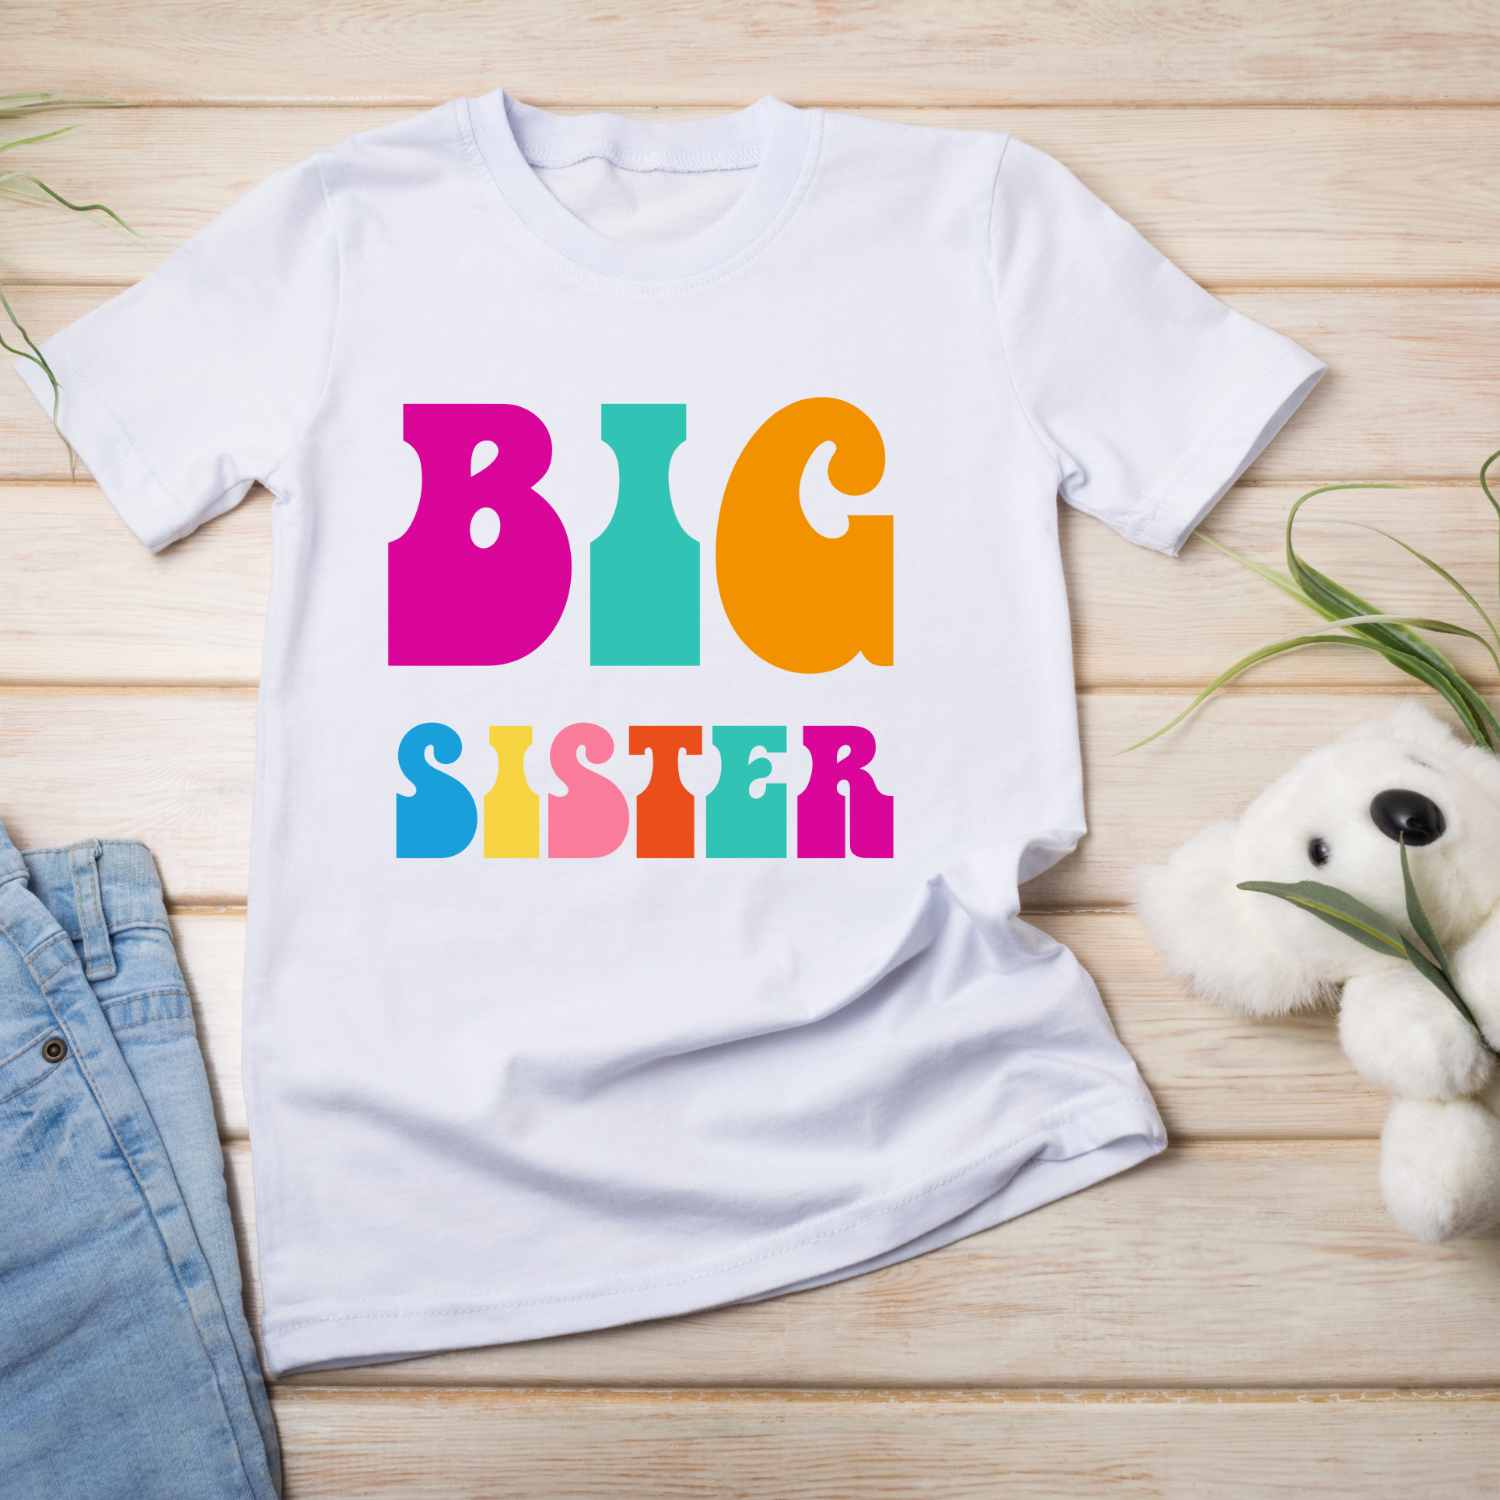 Big Sister T-shirt Design | Download Free Design